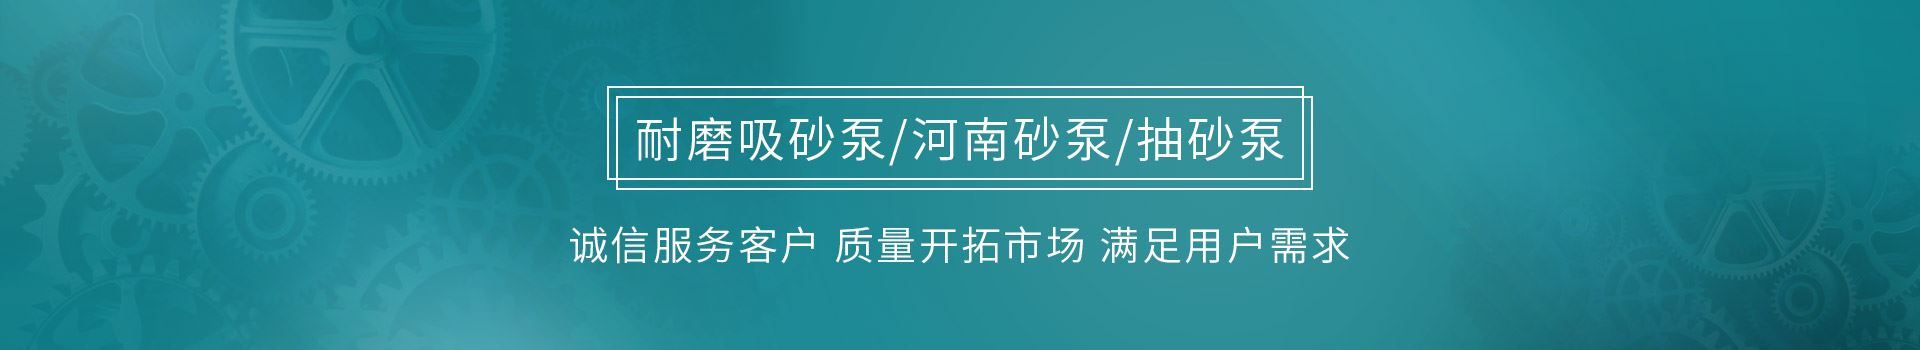 k8凯发(中国)app官方网站_image7340